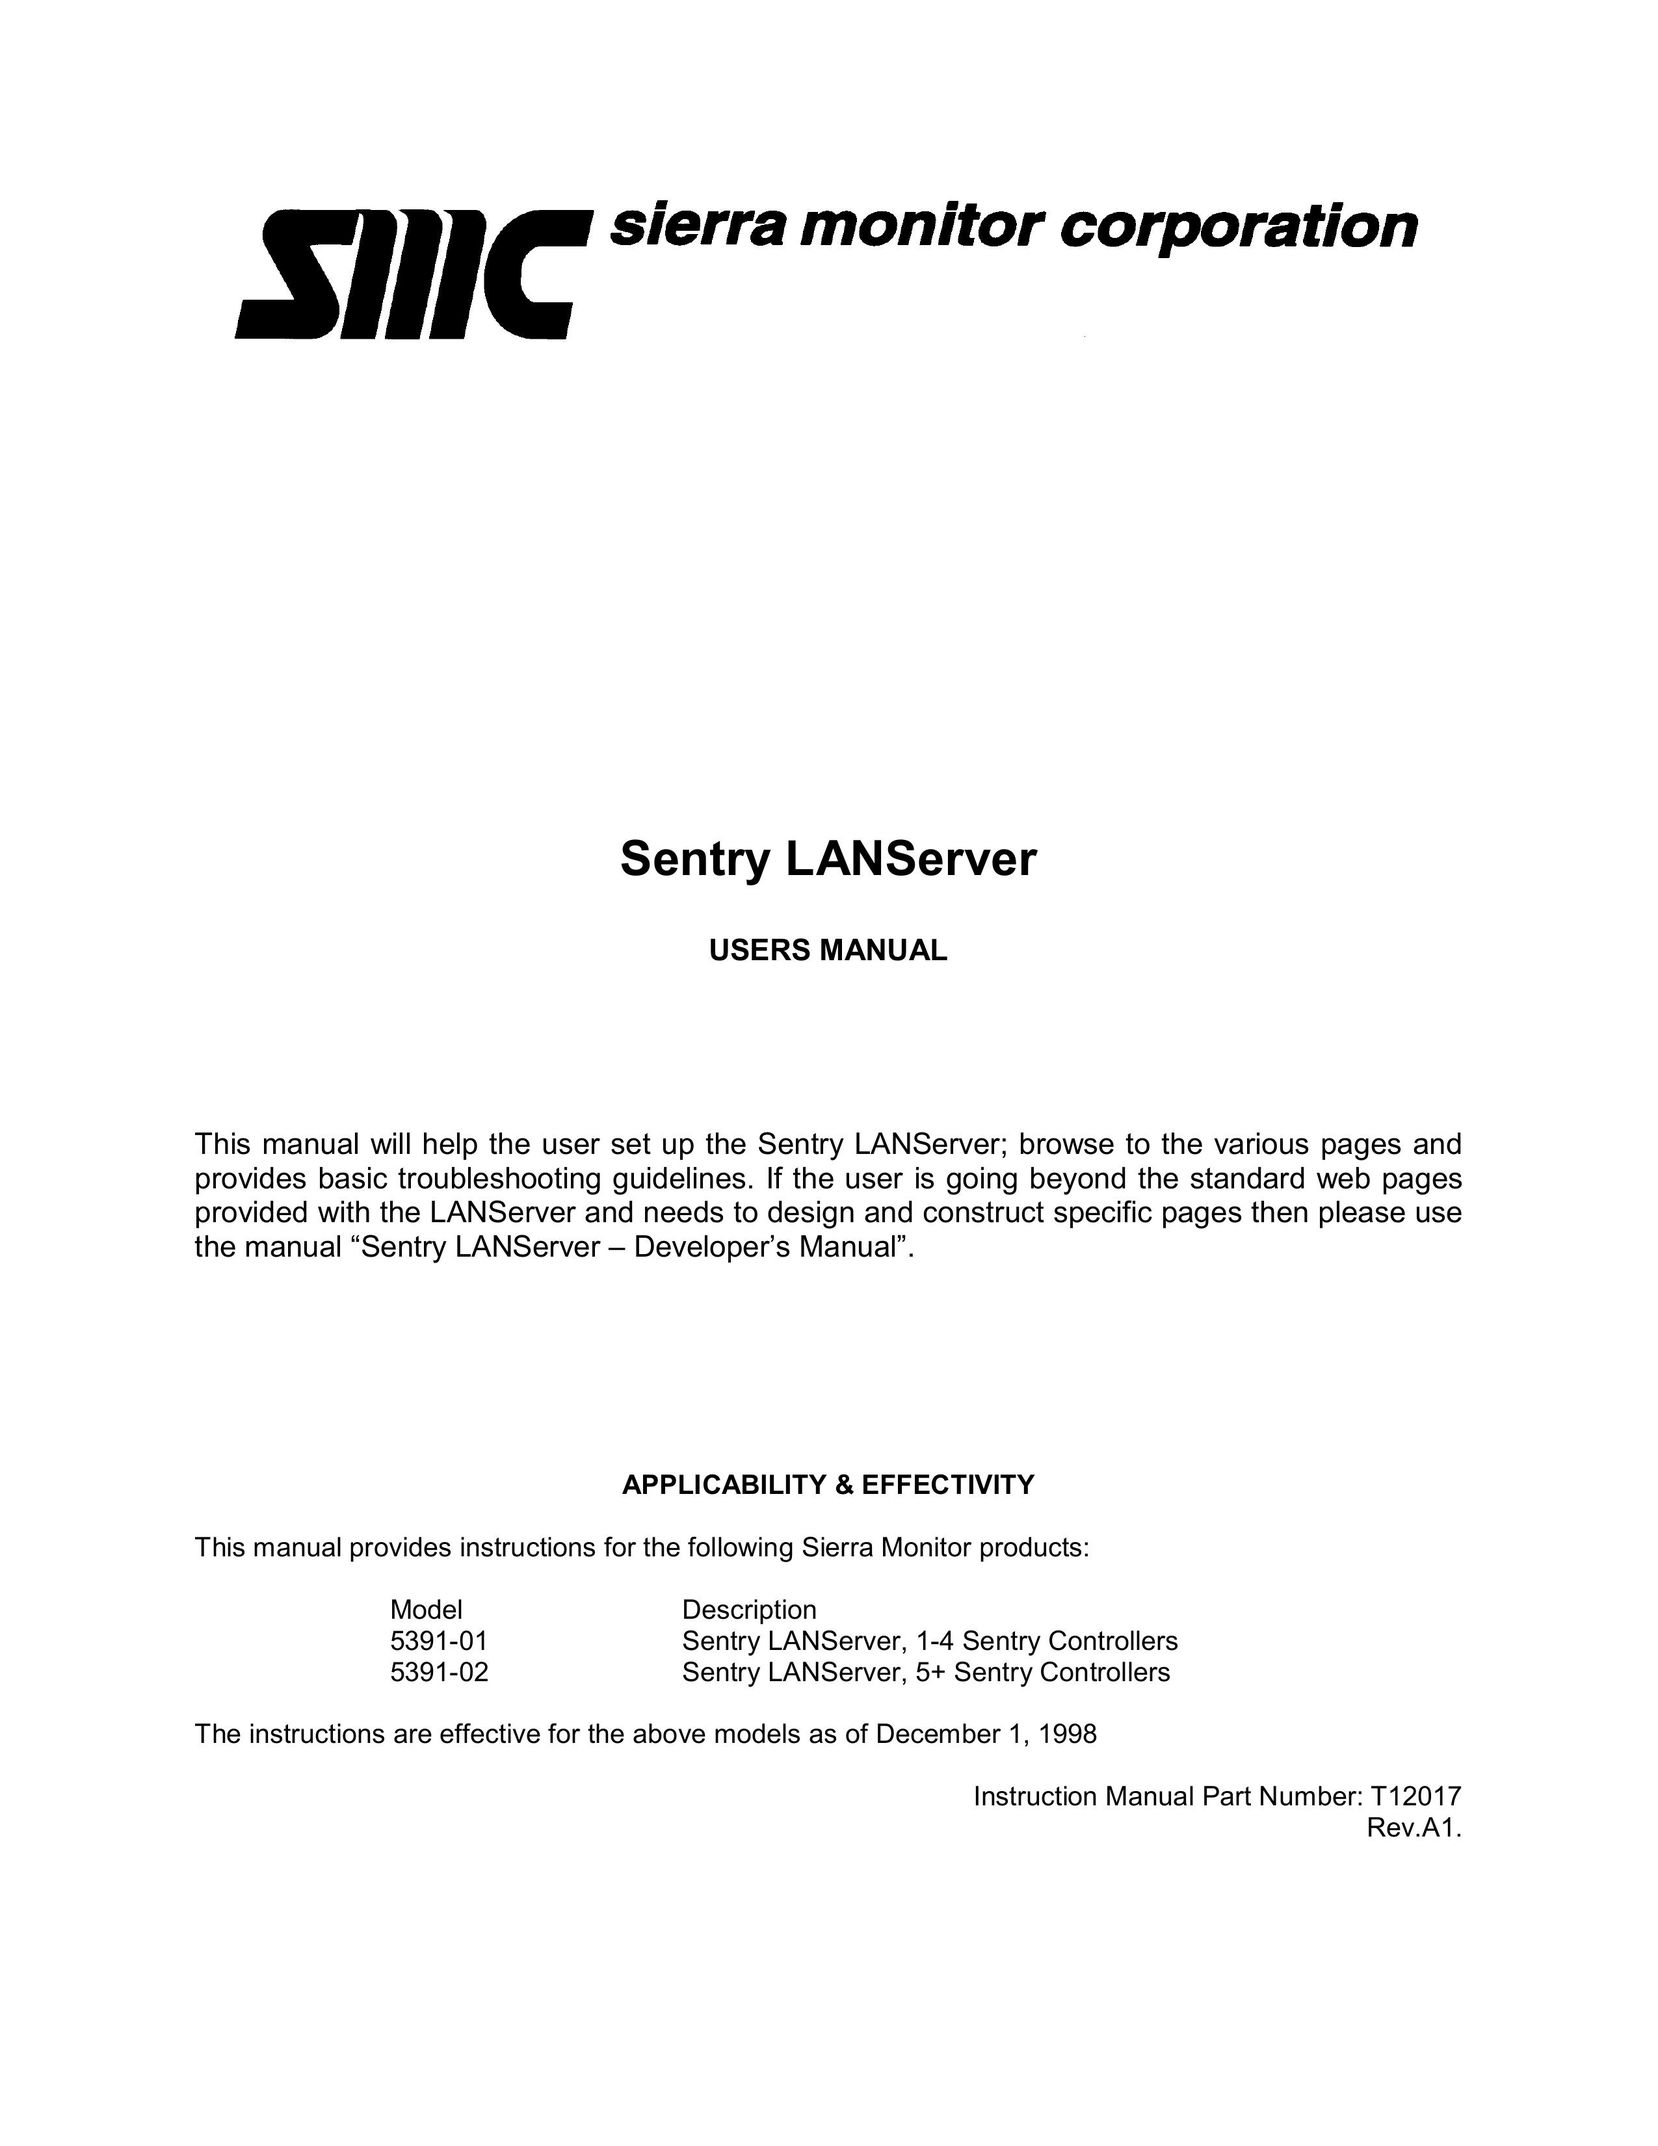 Sierra 5391-02 Server User Manual